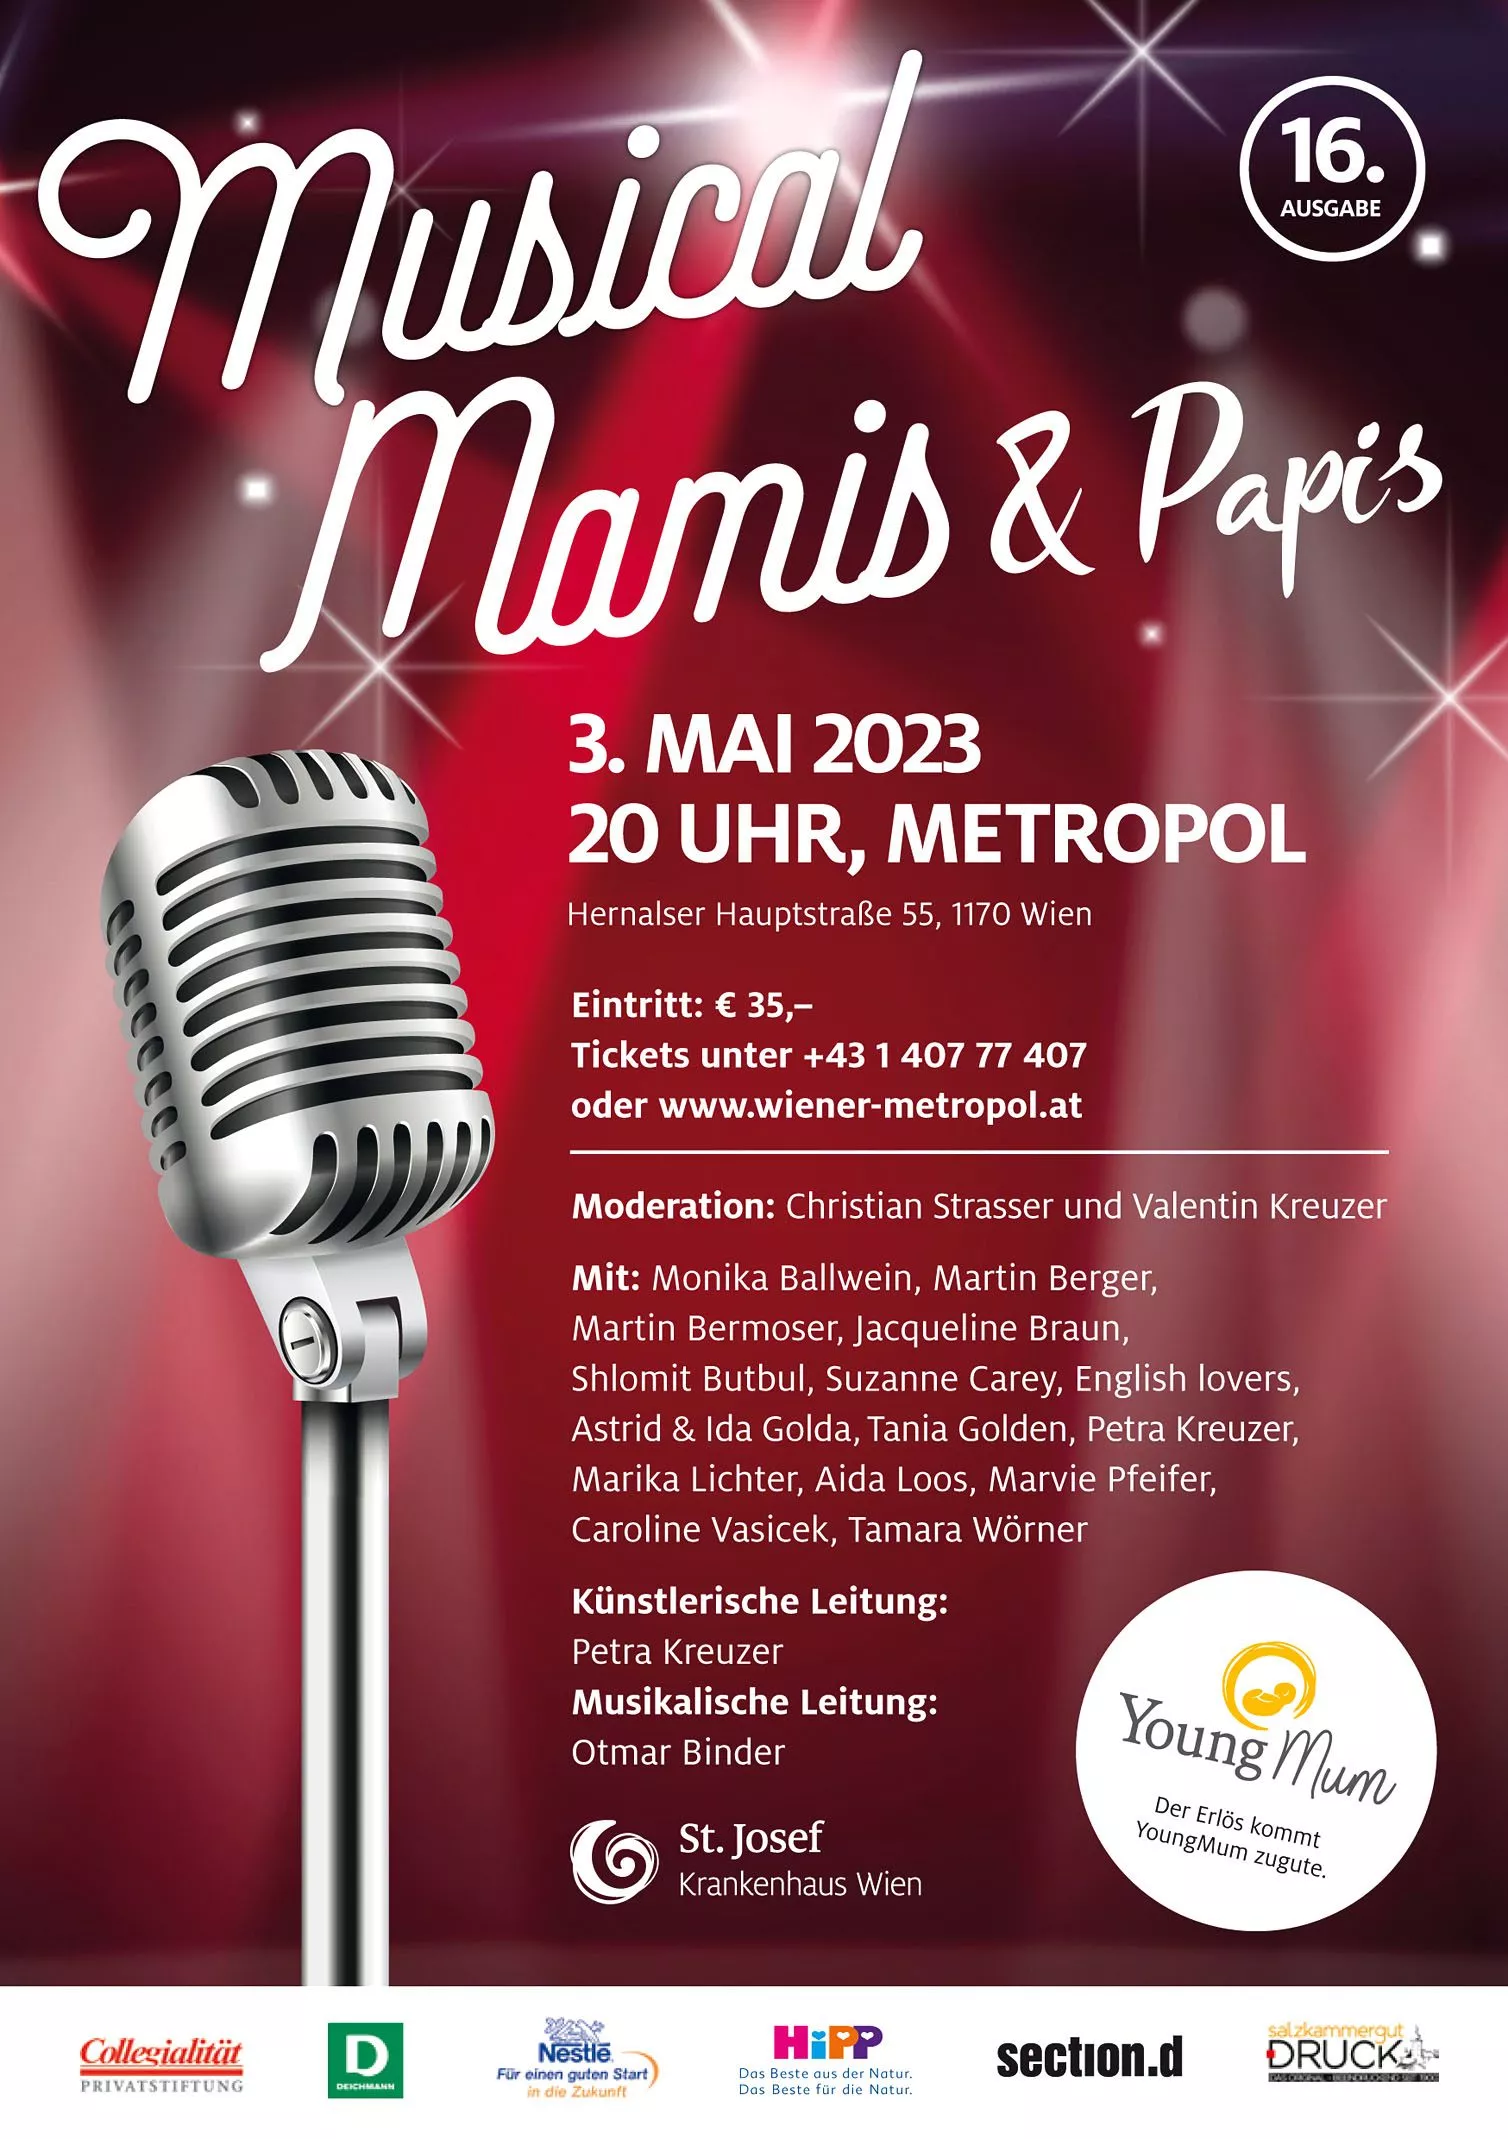 16. Ausgabe des "Musical Mamis & Papis" im Wiener Metropol